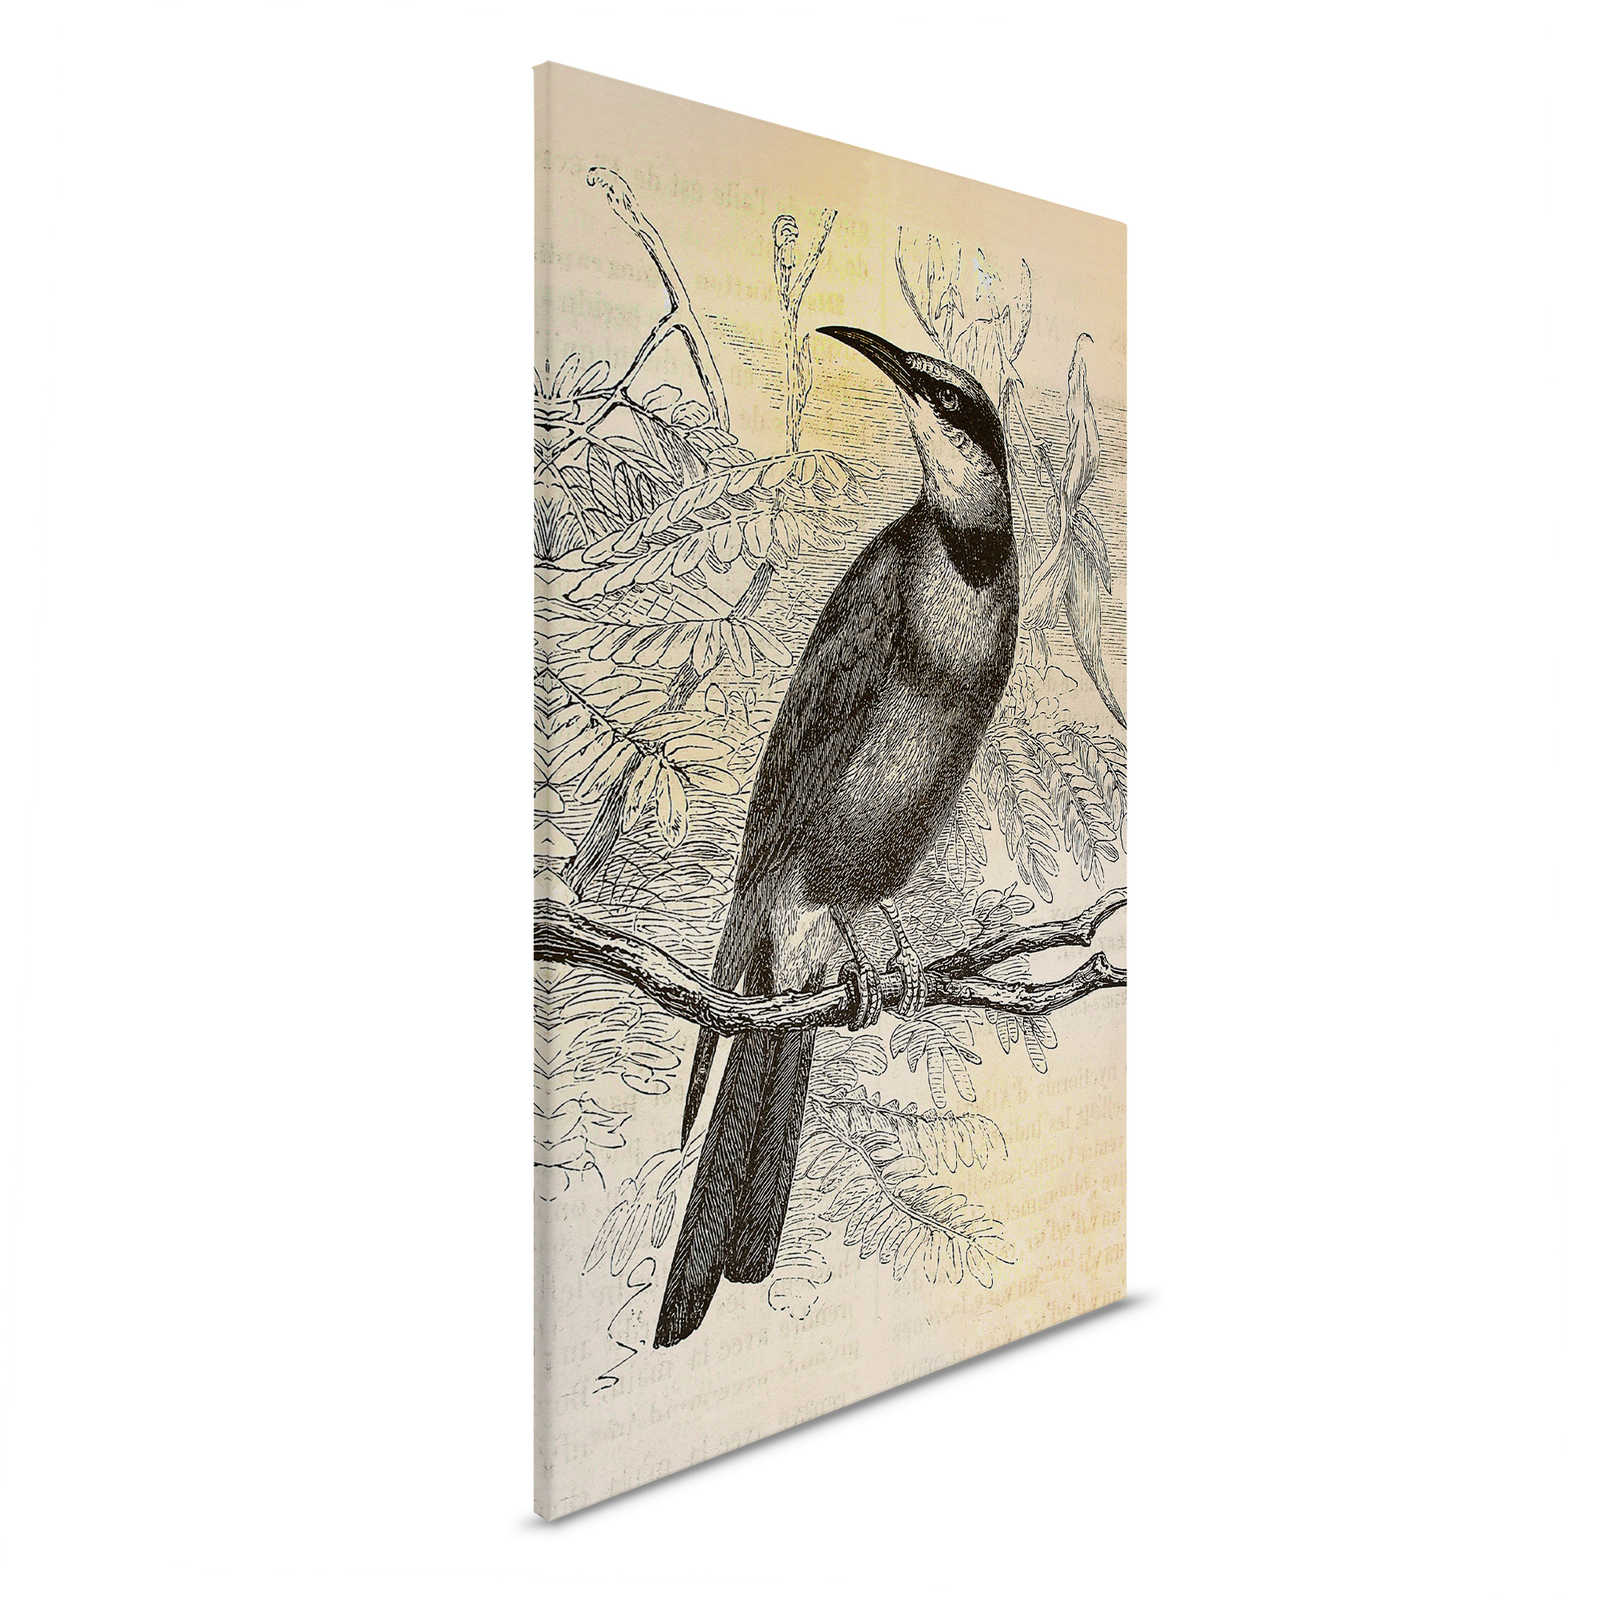 Retro Canvas Painting with Bird Pattern - 0.60 m x 0.90 m
